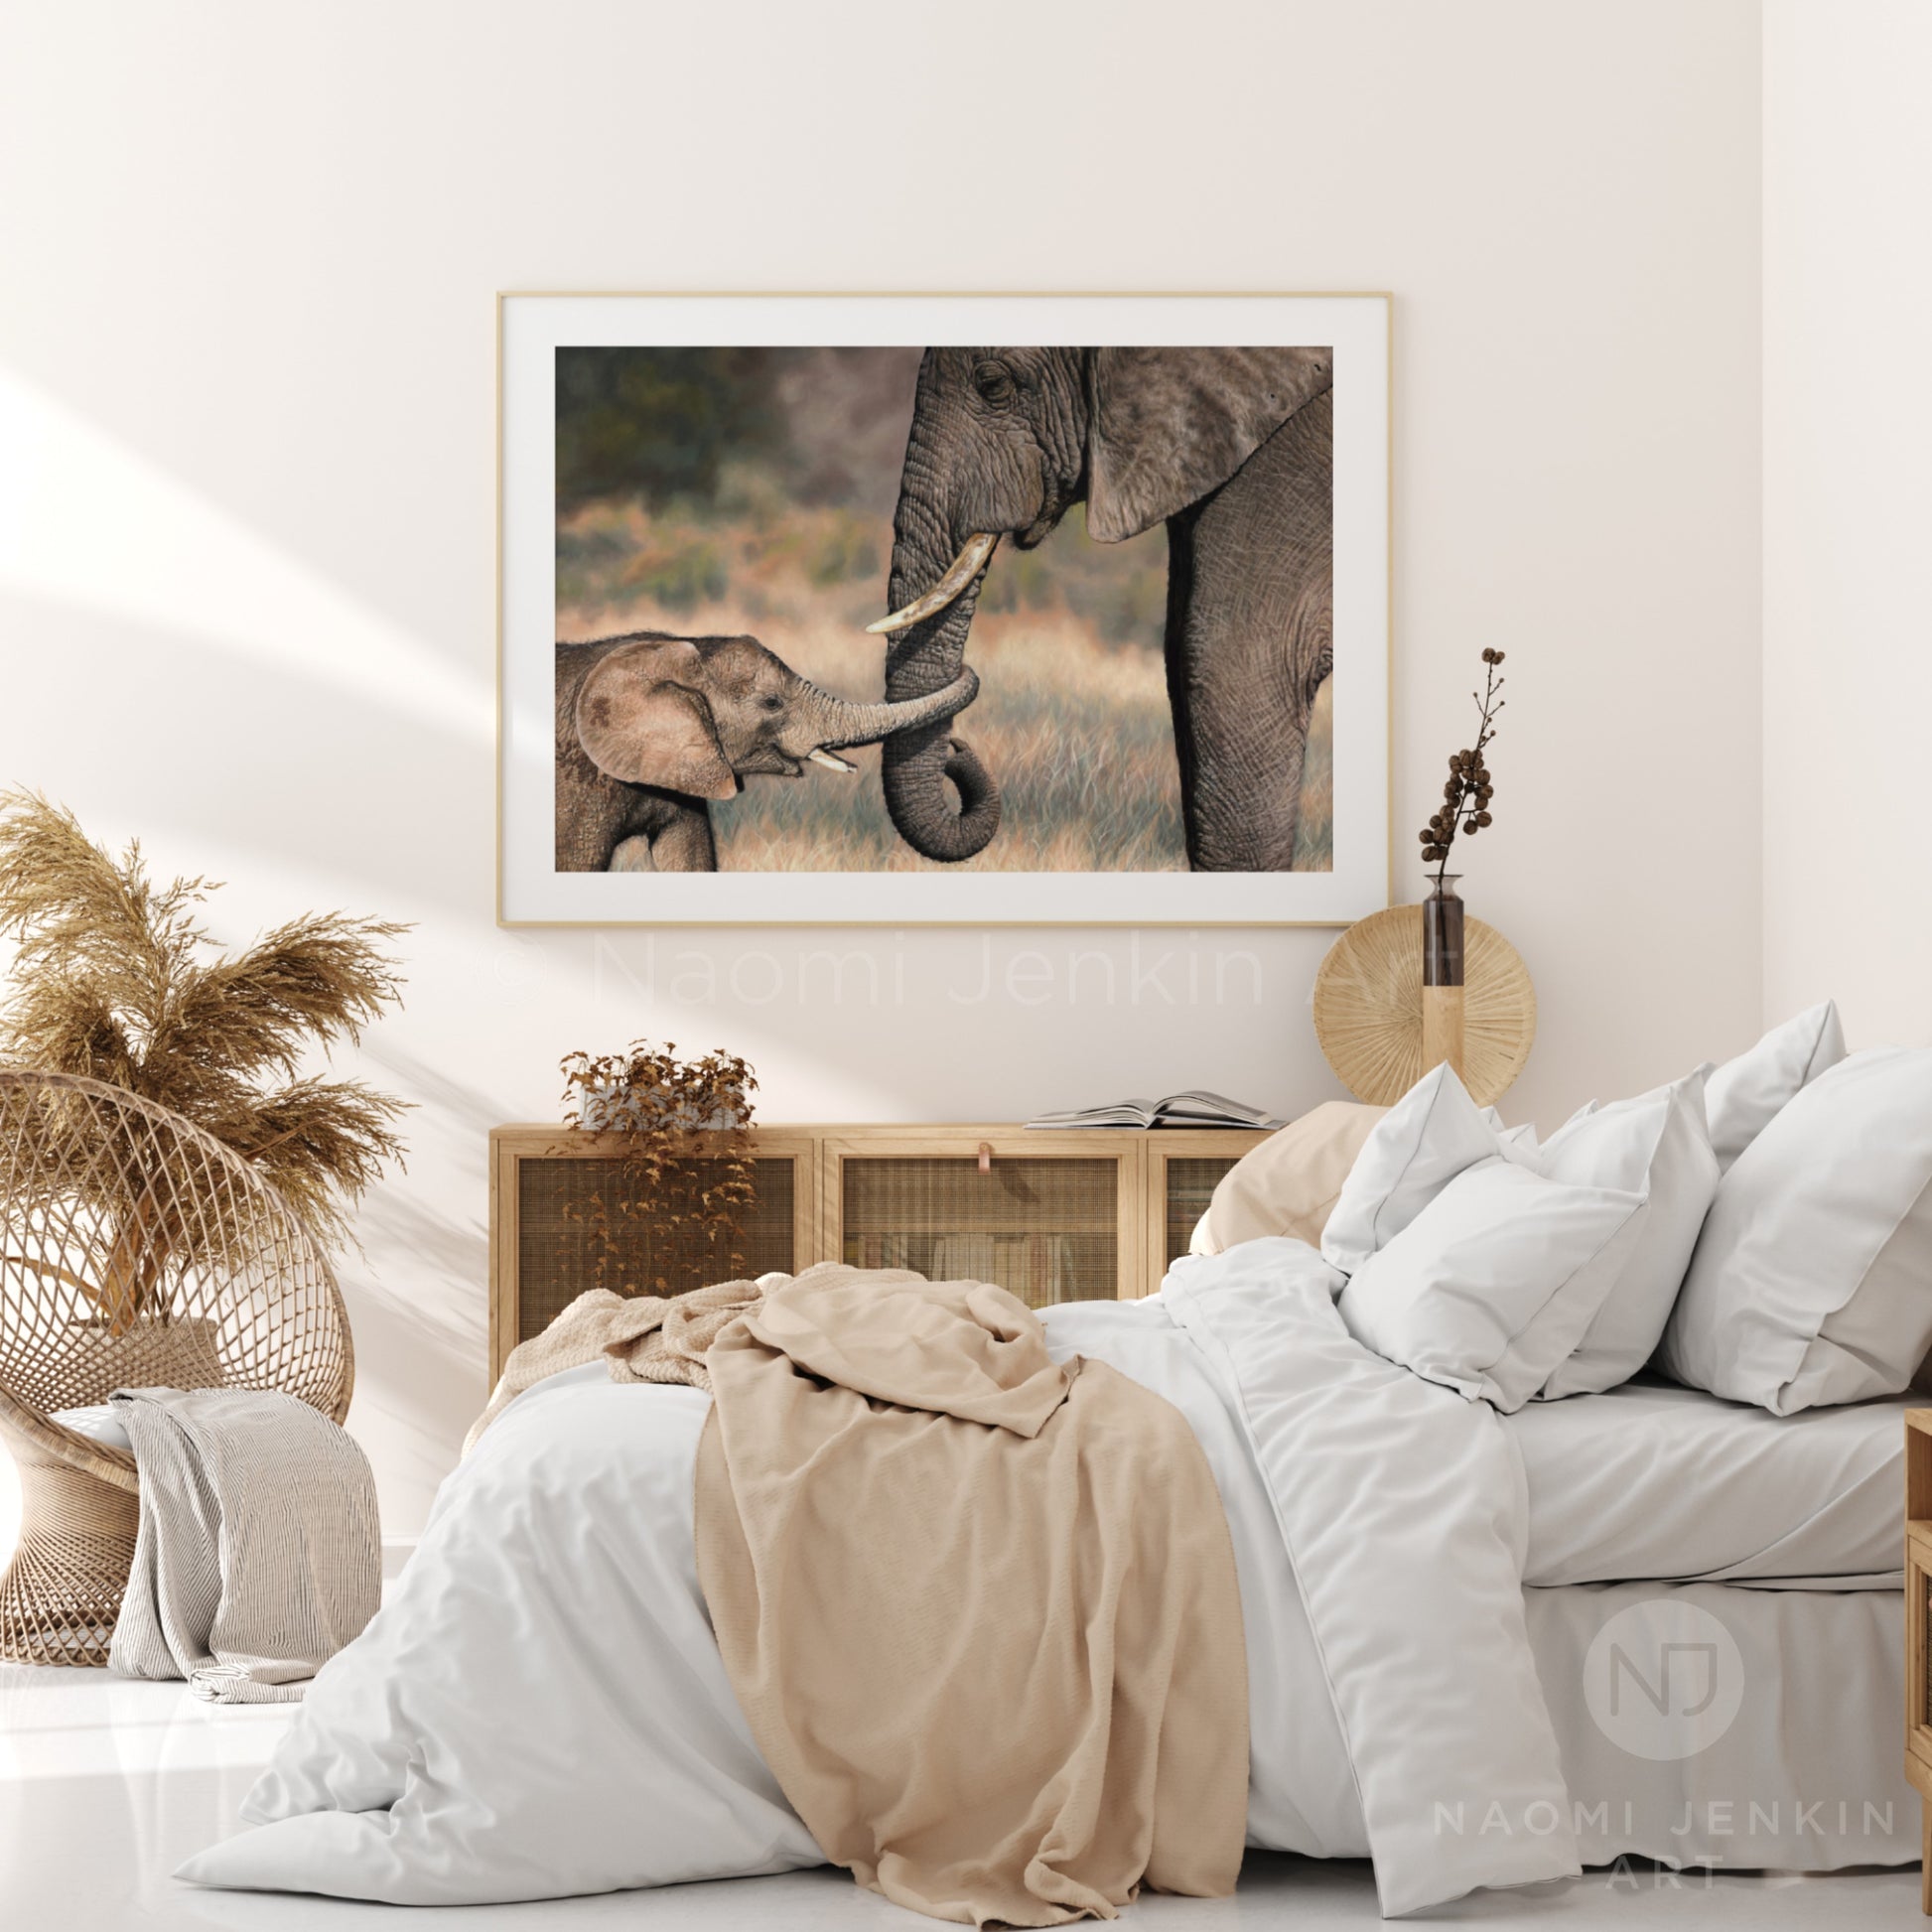 Framed elephant art by wildlife artist Naomi Jenkin in a bedroom setting.